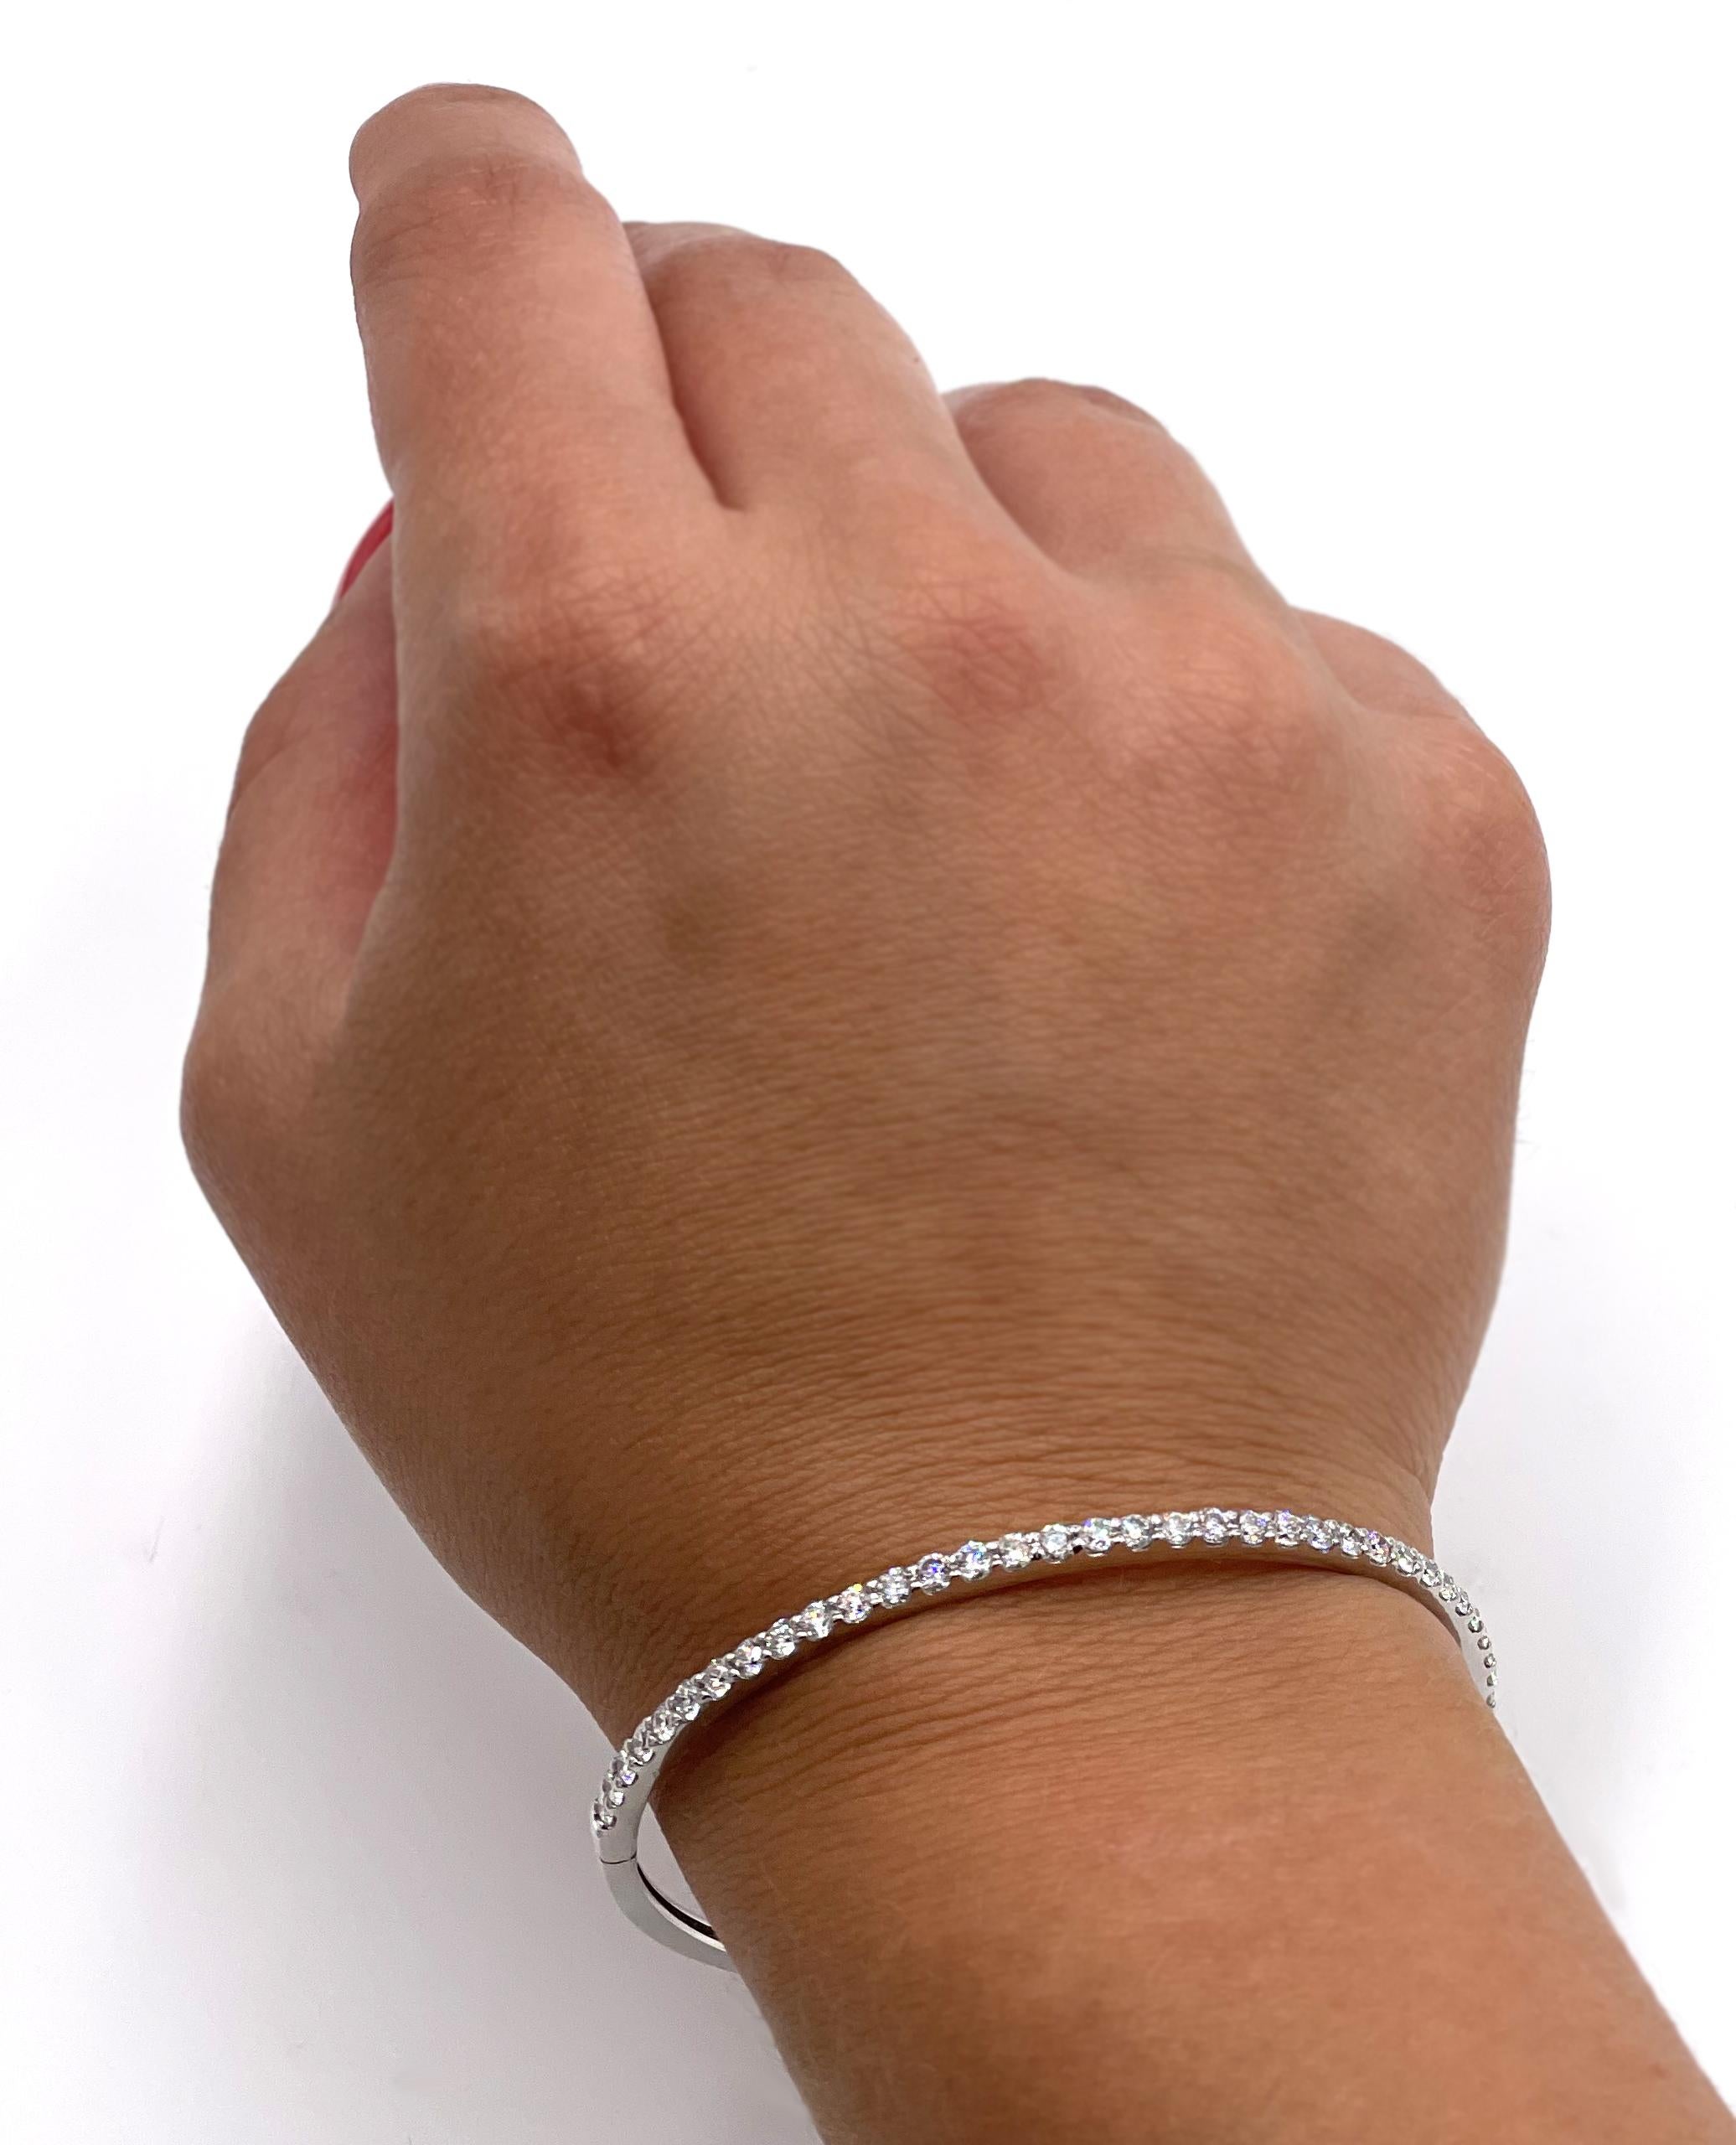 Contemporary 14K White Gold Diamond Bangle Bracelet - 1.75 Carats For Sale